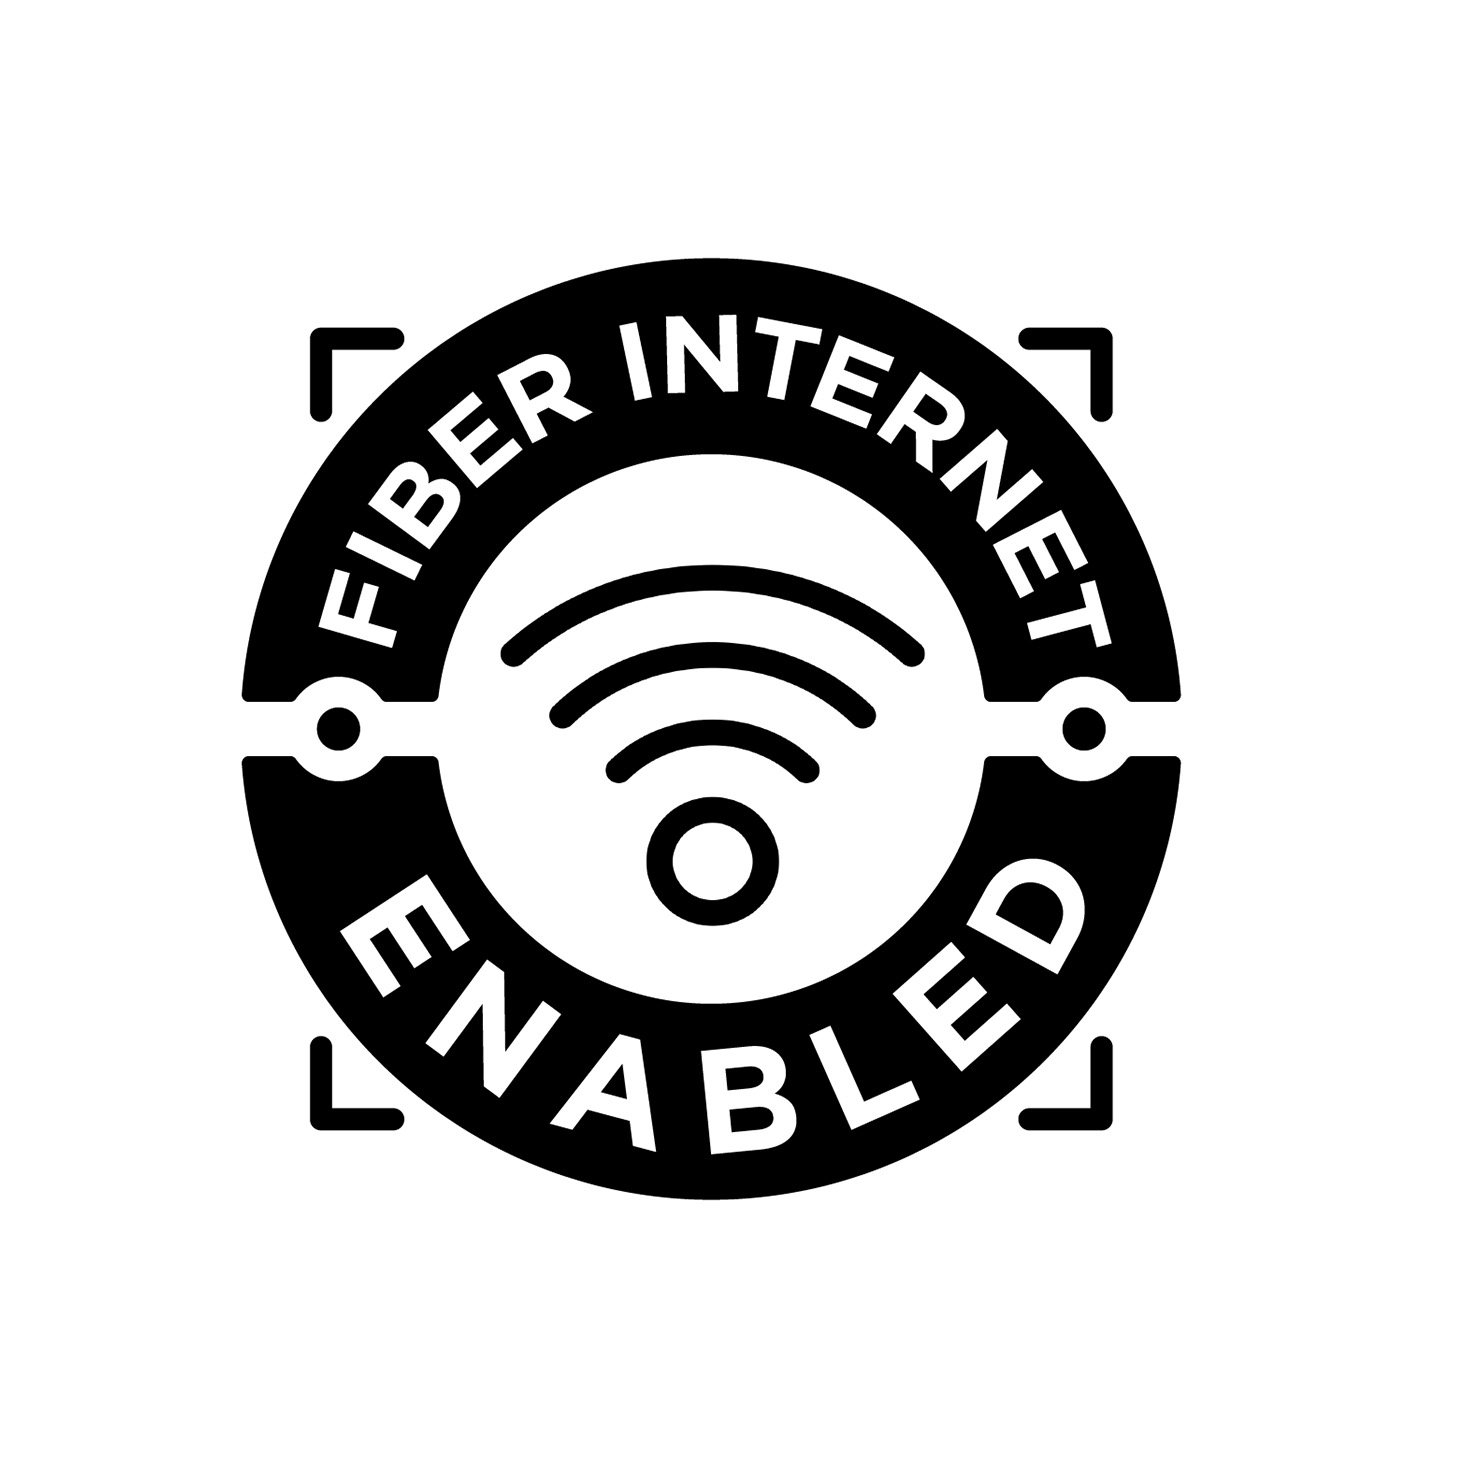 Black and white logo reading Fiber Internet Enabled